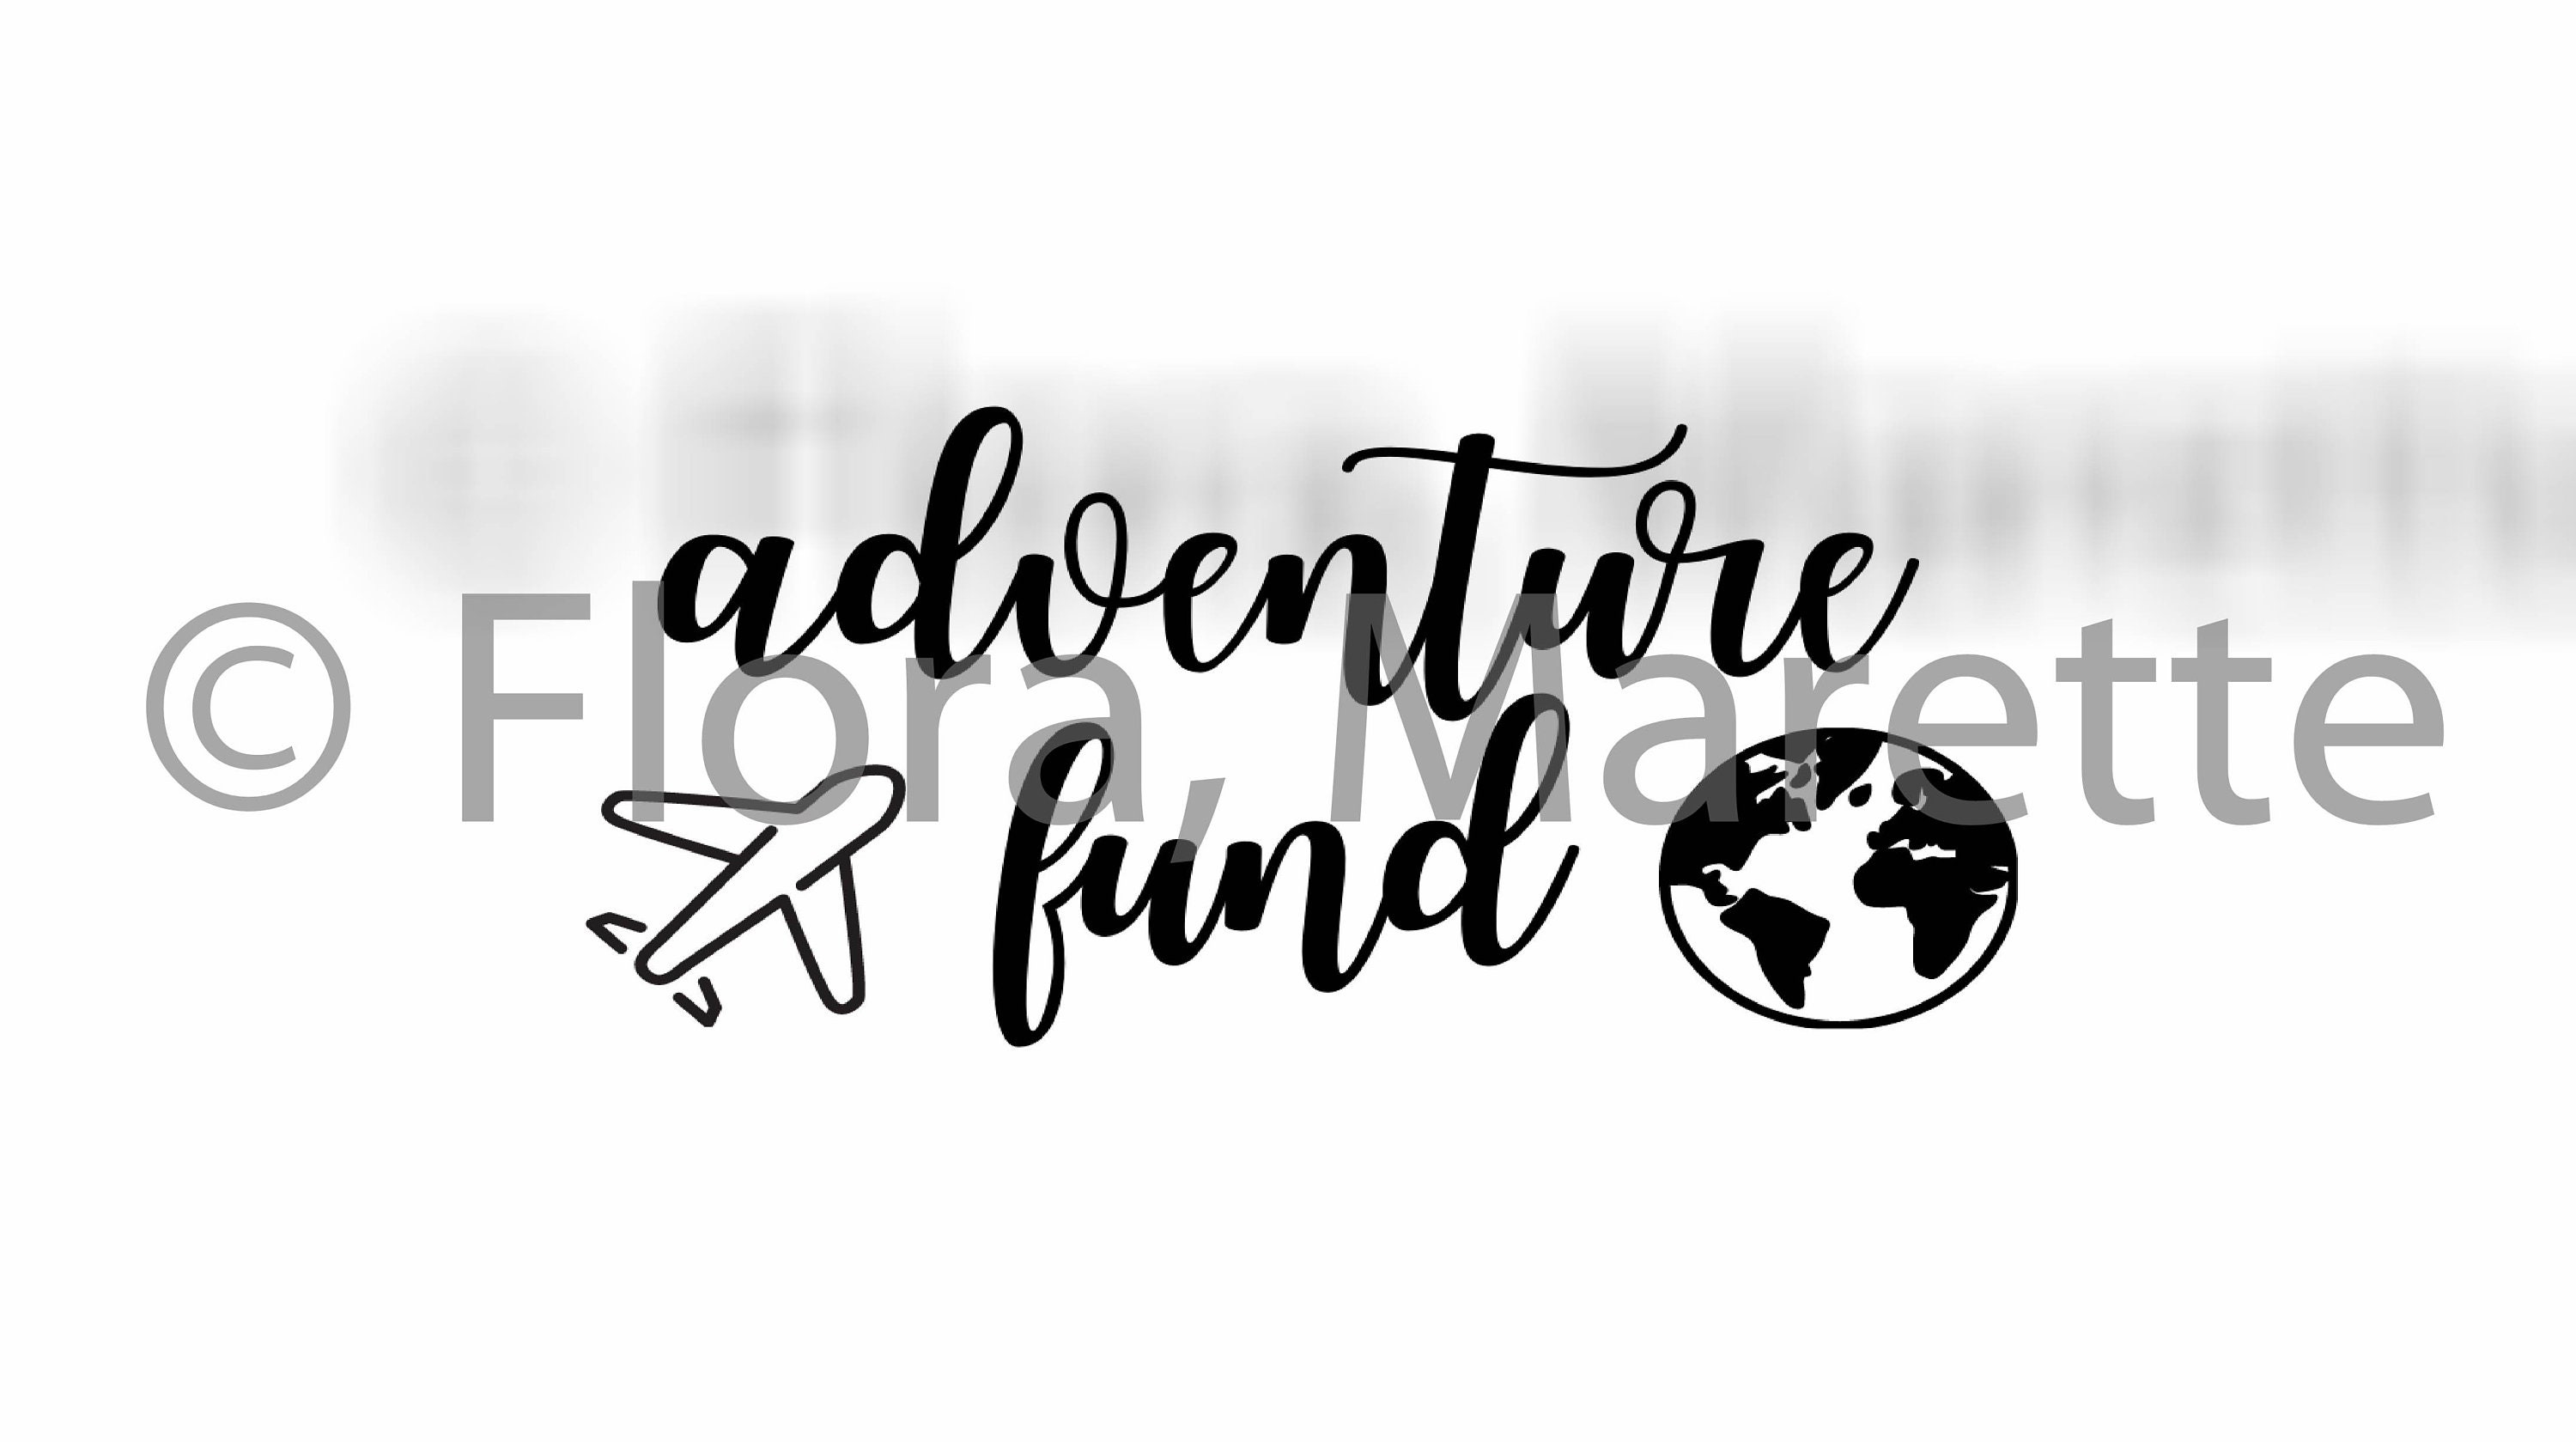 Adventure Fund Cut File for Savings Bank | Custom Travel Fund Vinyl Decal  Sticker SVG PNG JPG for Money Bank